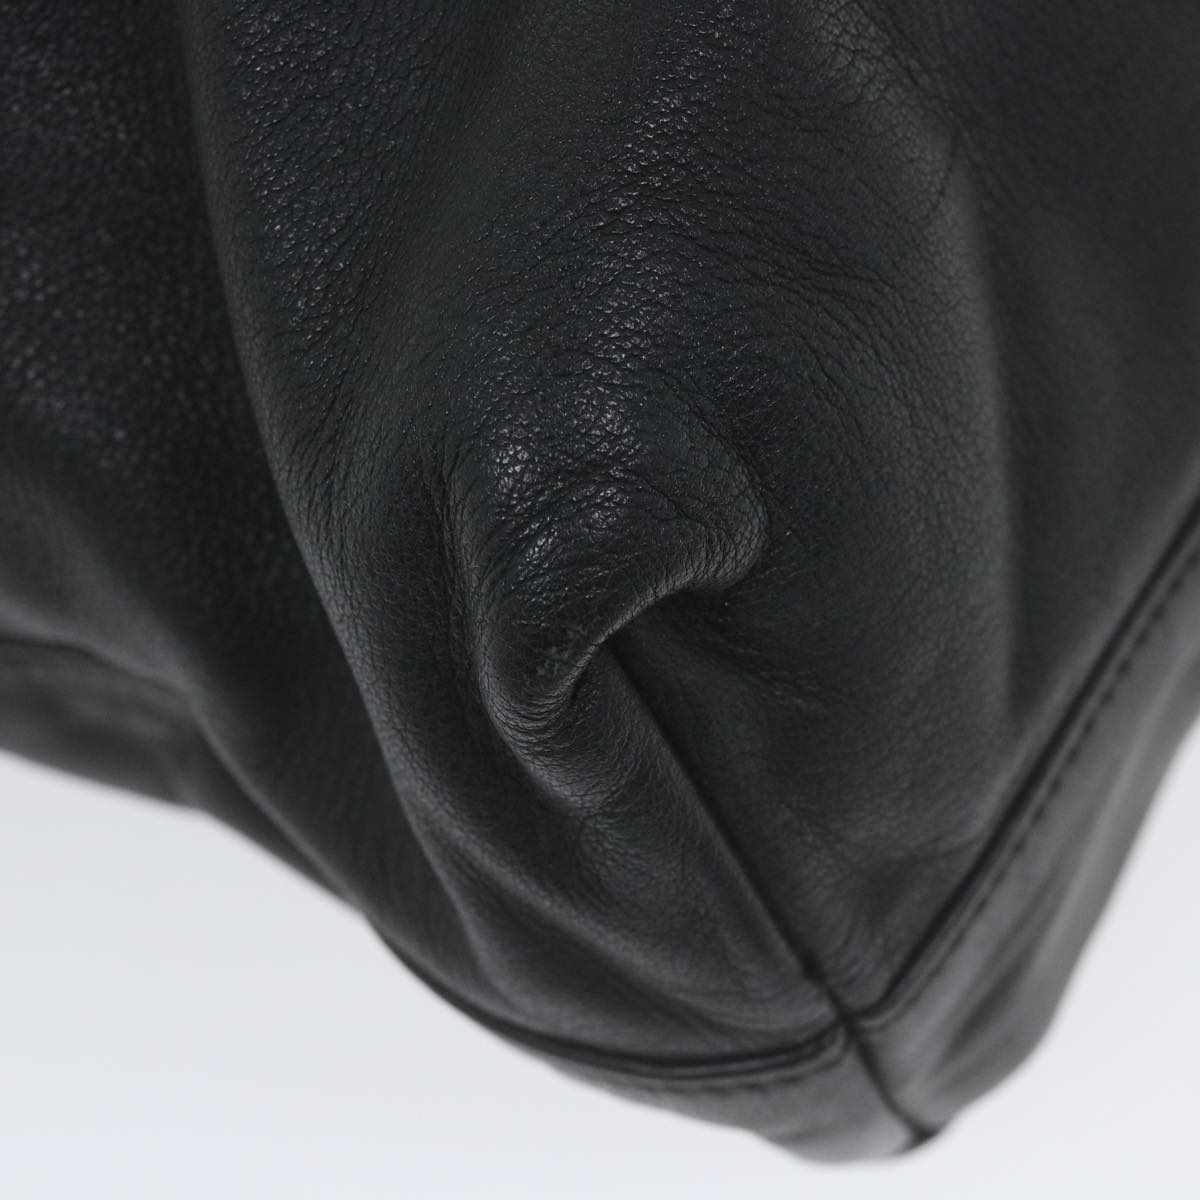 PRADA Tote Bag Leather 2way Black Auth ar10735